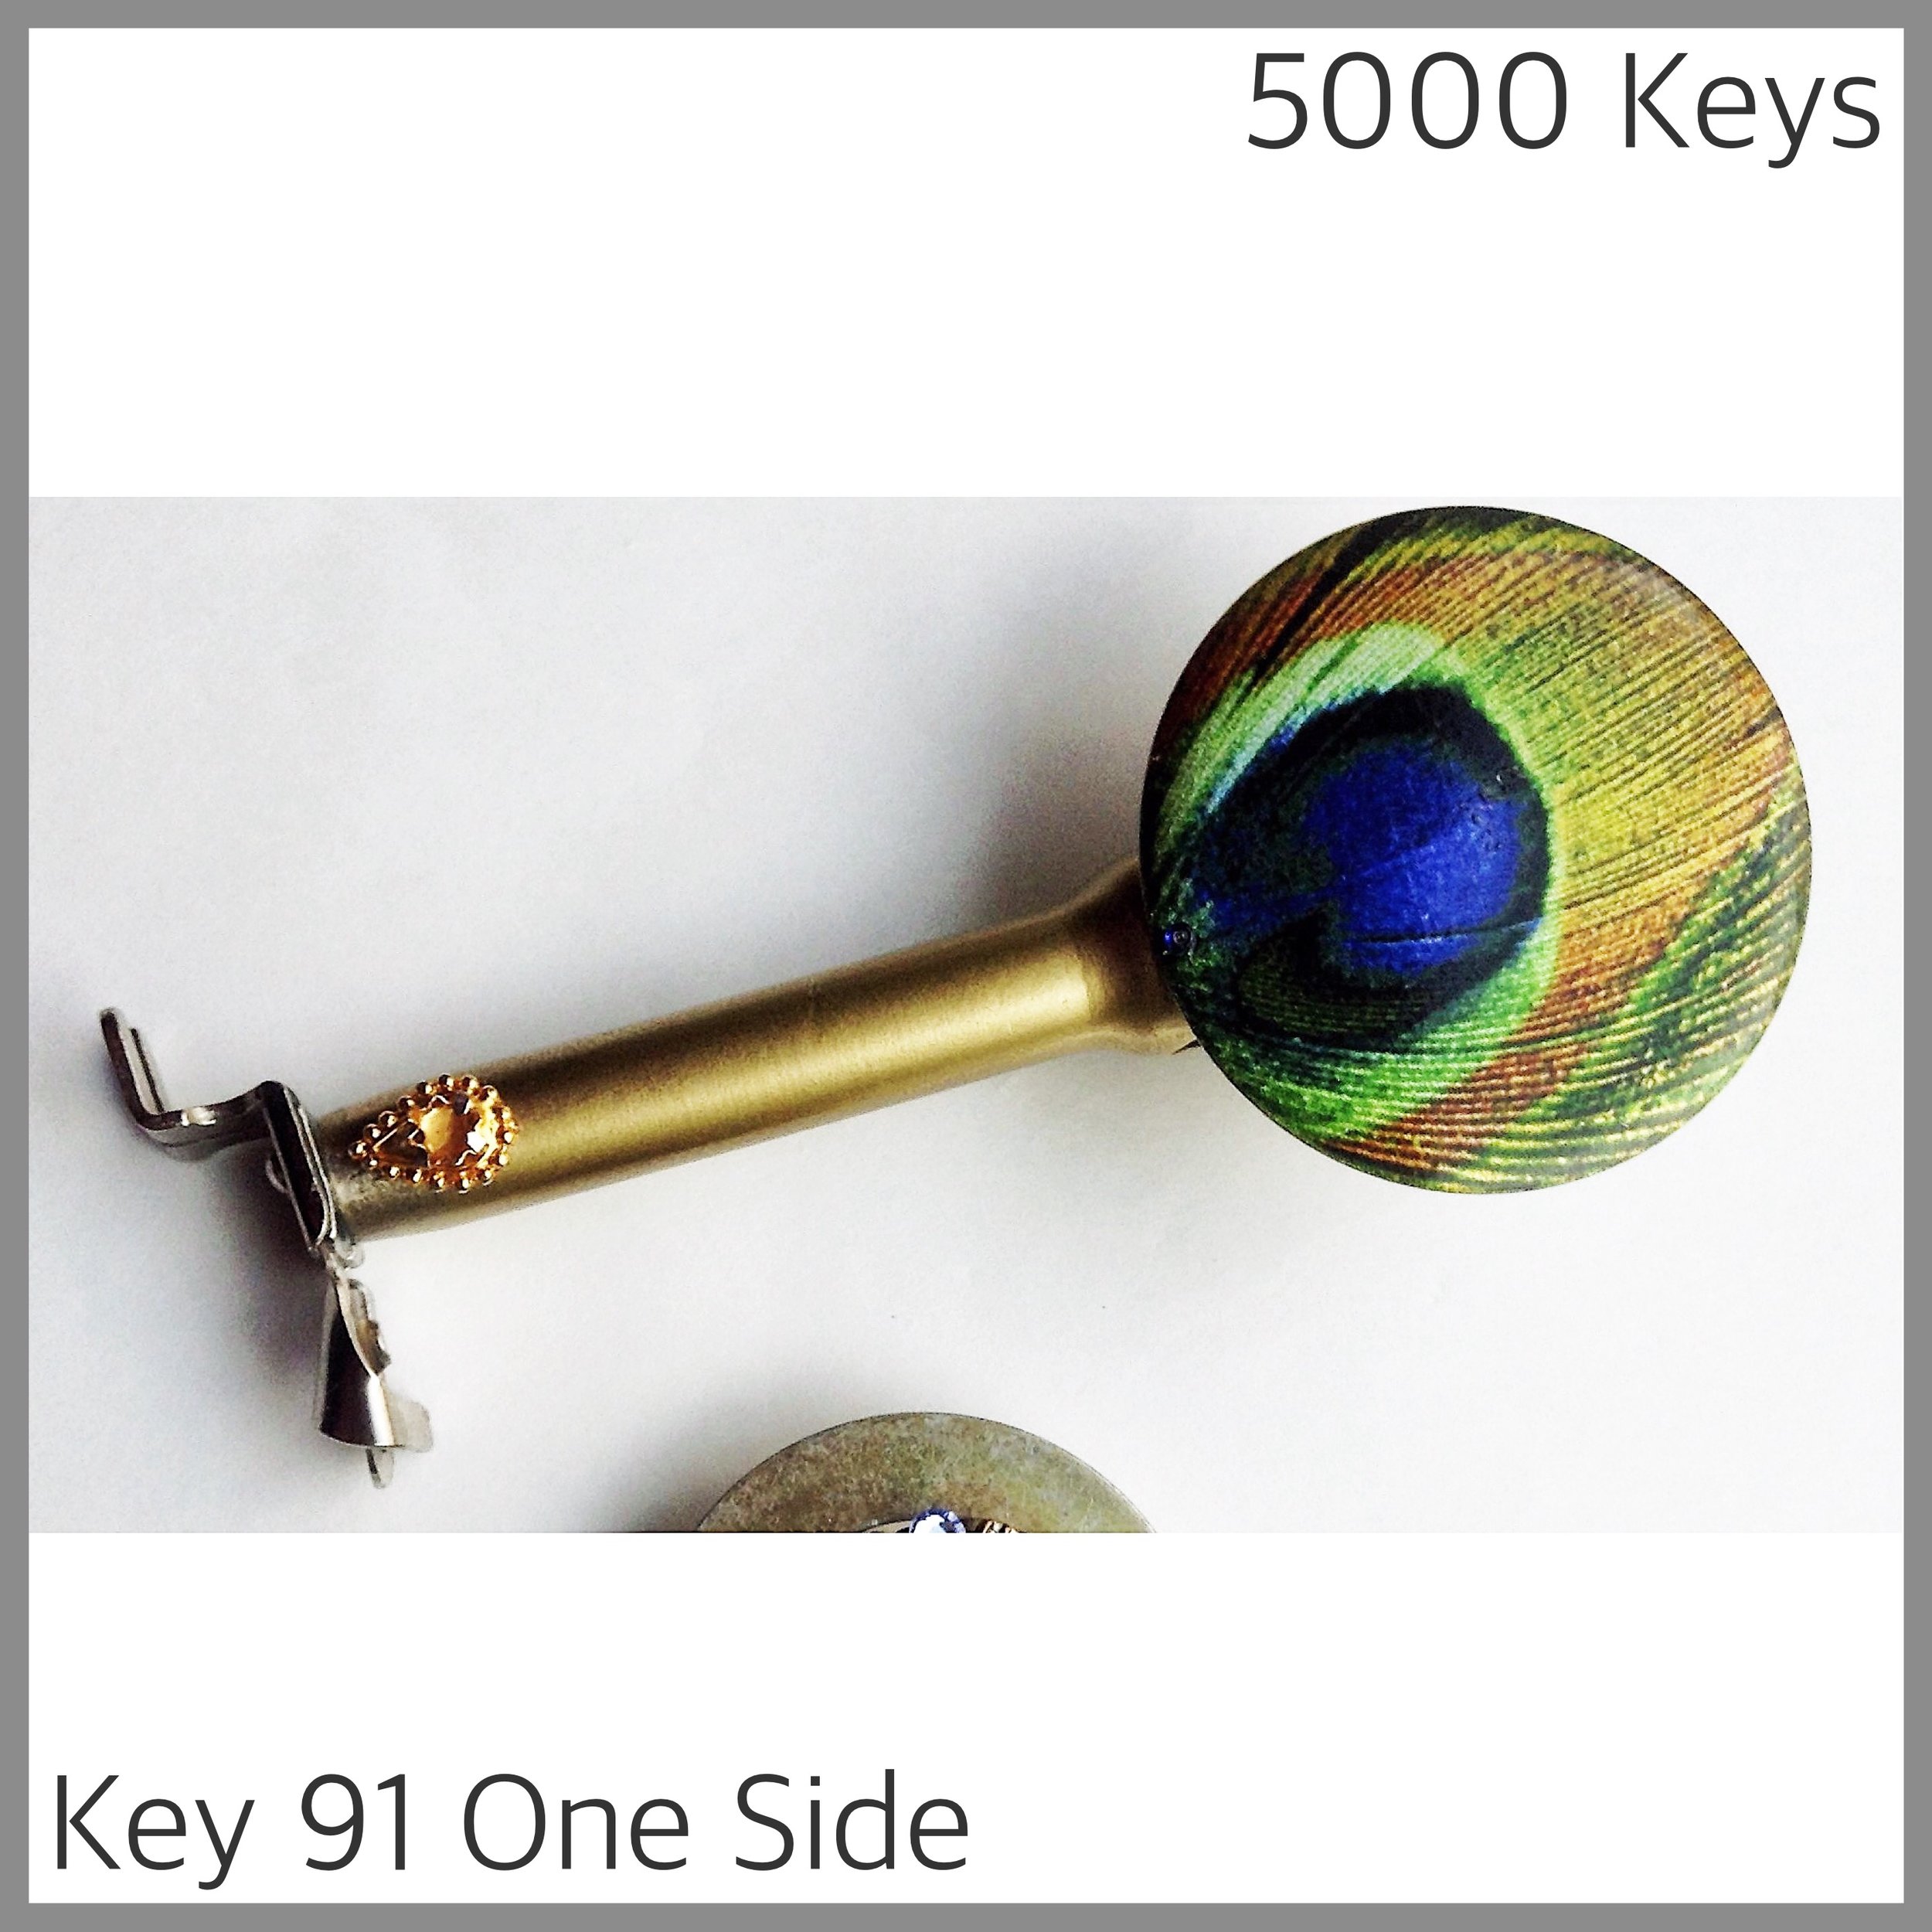 Key 91 one side.JPG